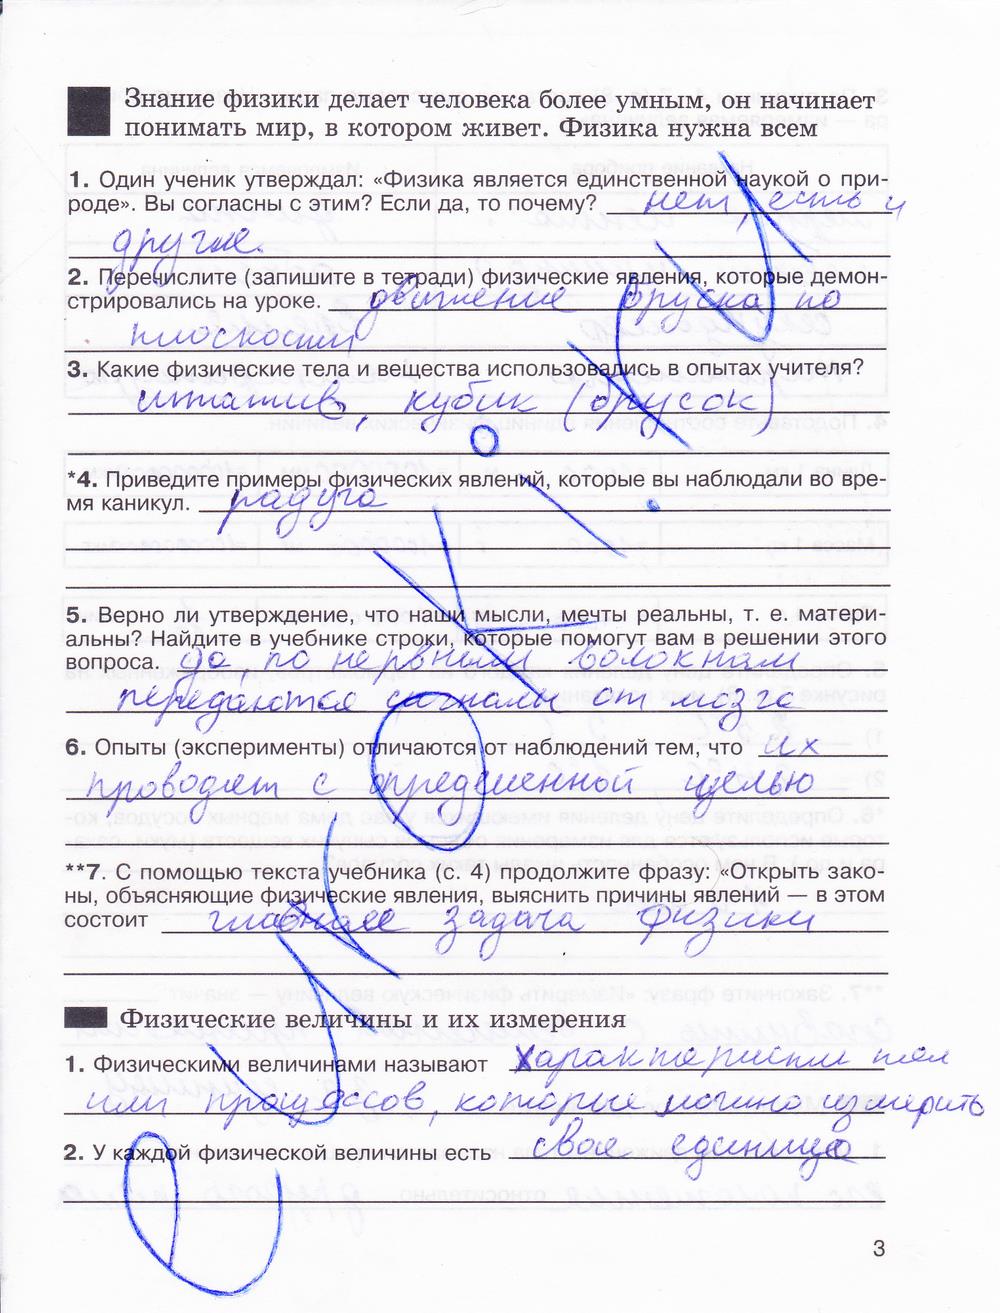 гдз 7 класс рабочая тетрадь страница 3 физика Мартынова, Бовин, Коротаев